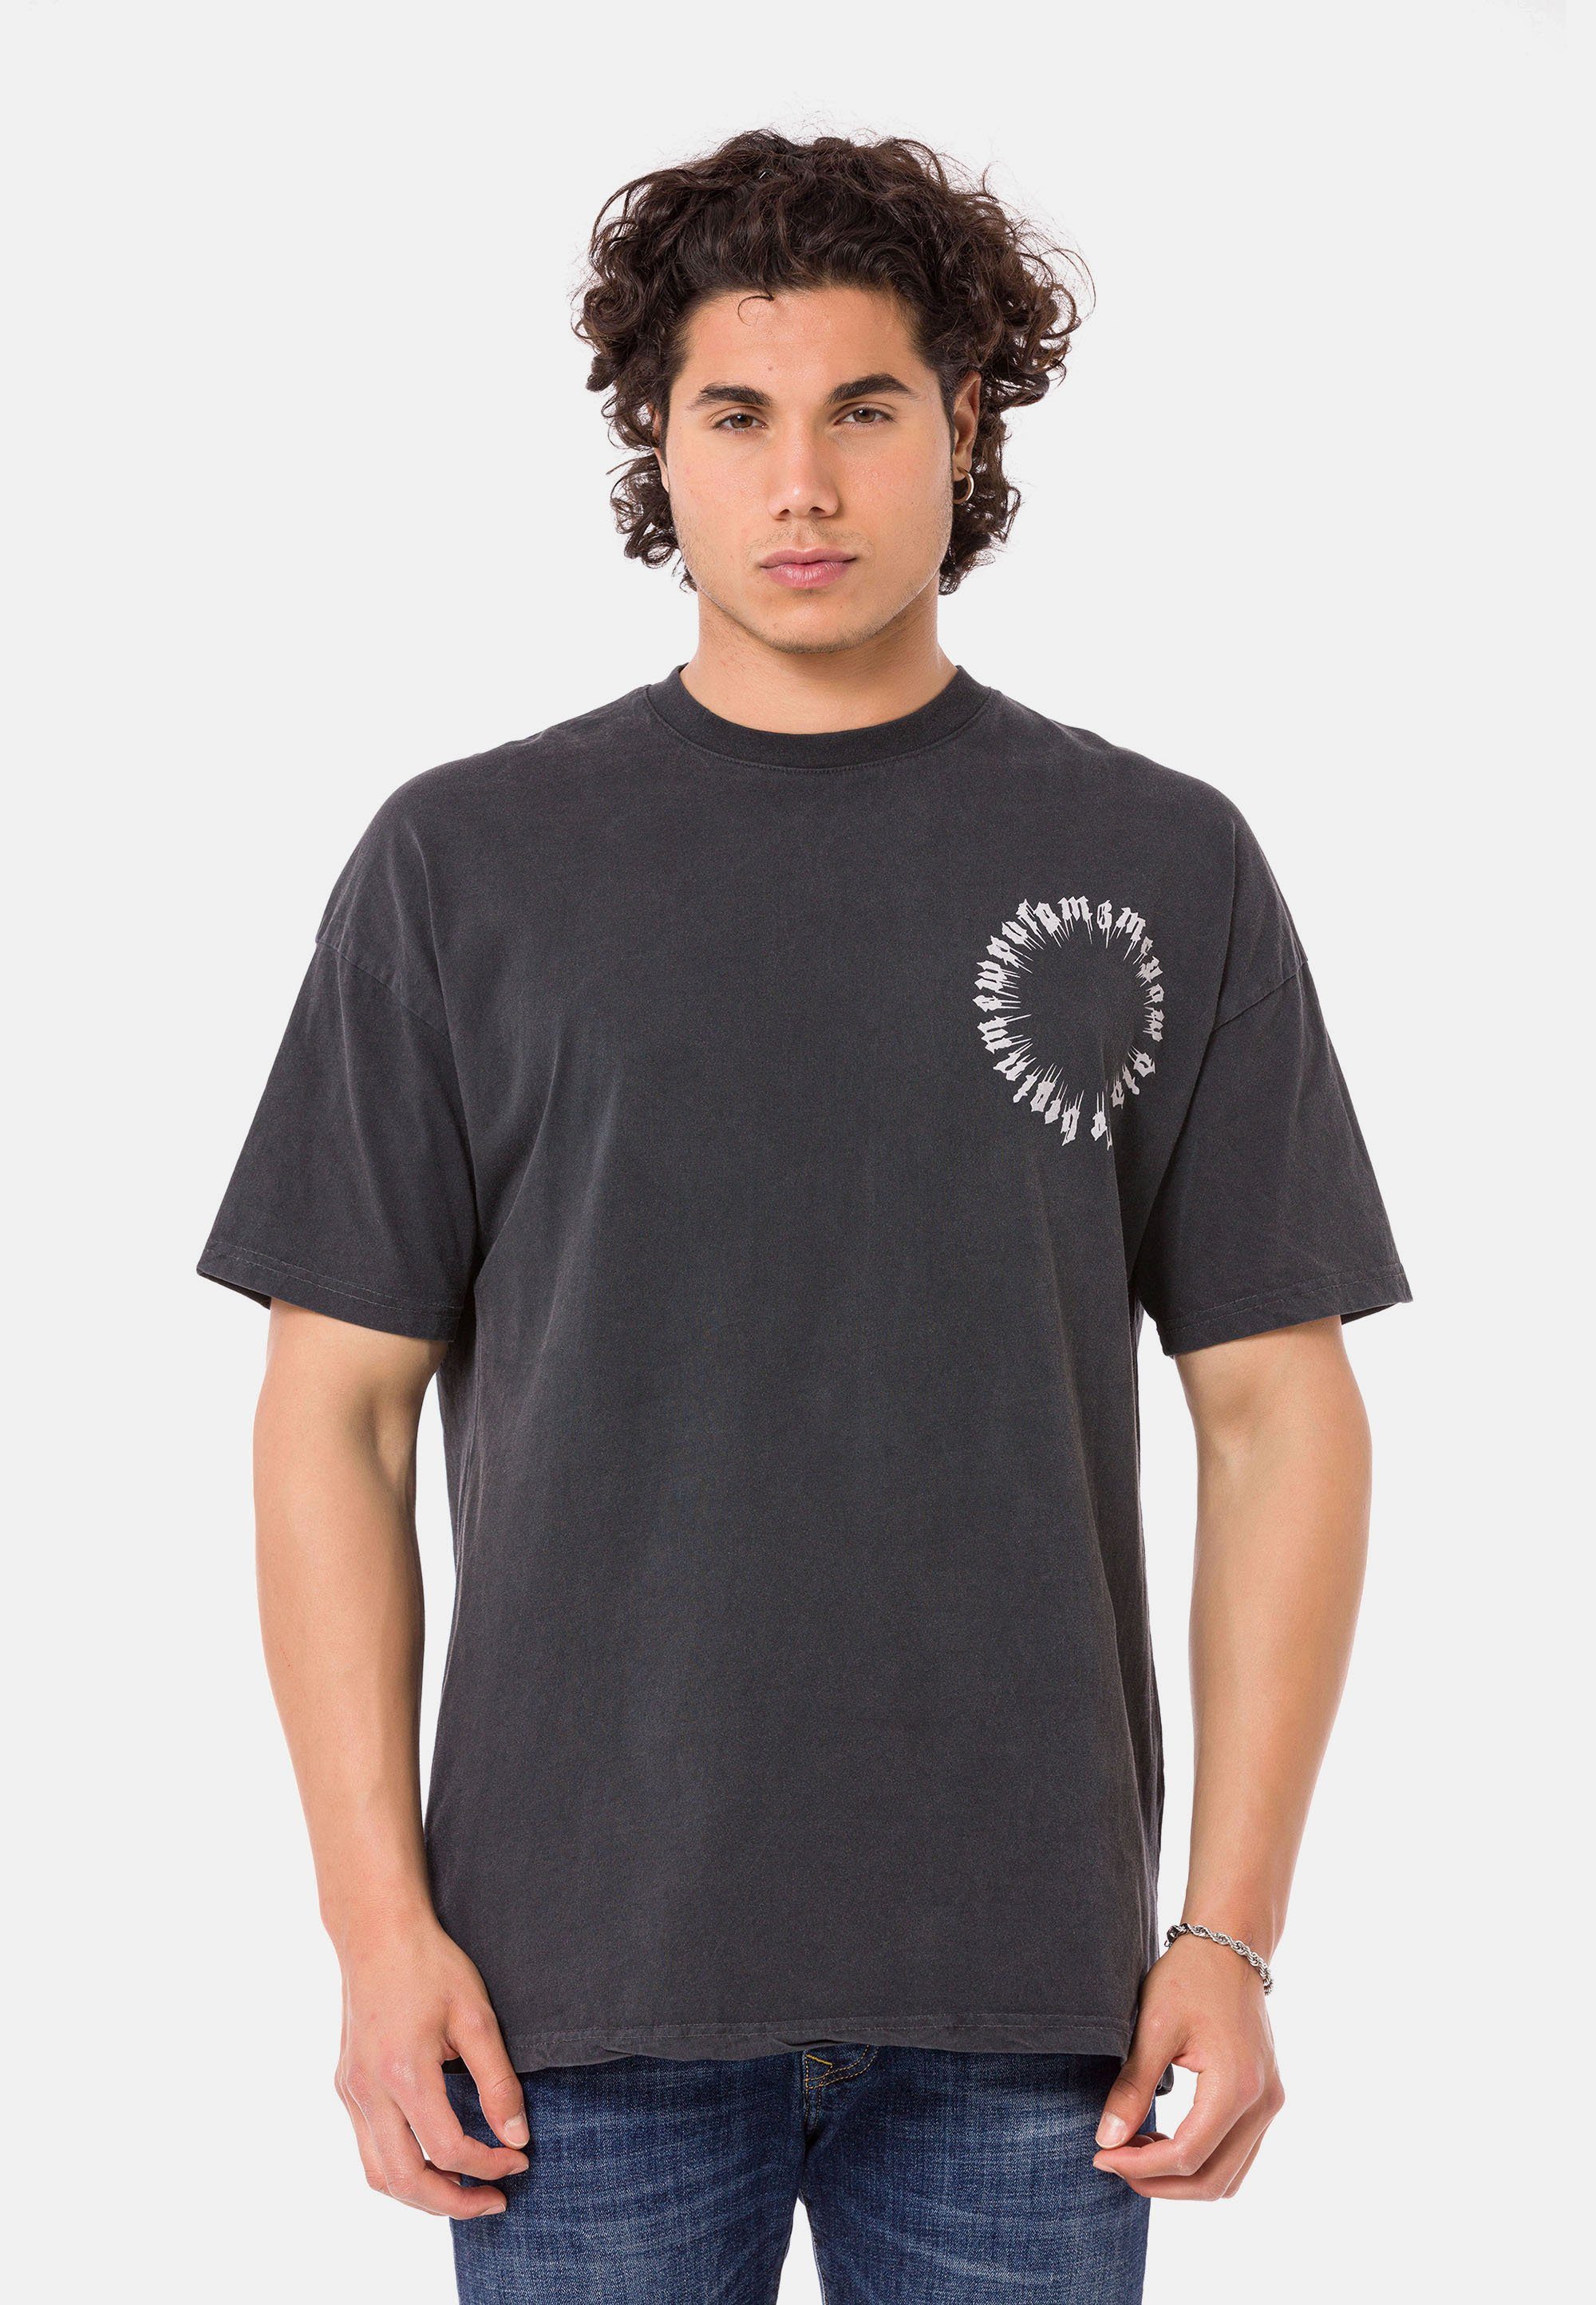 RedBridge T-Shirt dem Print Rücken großflächigem schwarz auf mit Runcorn